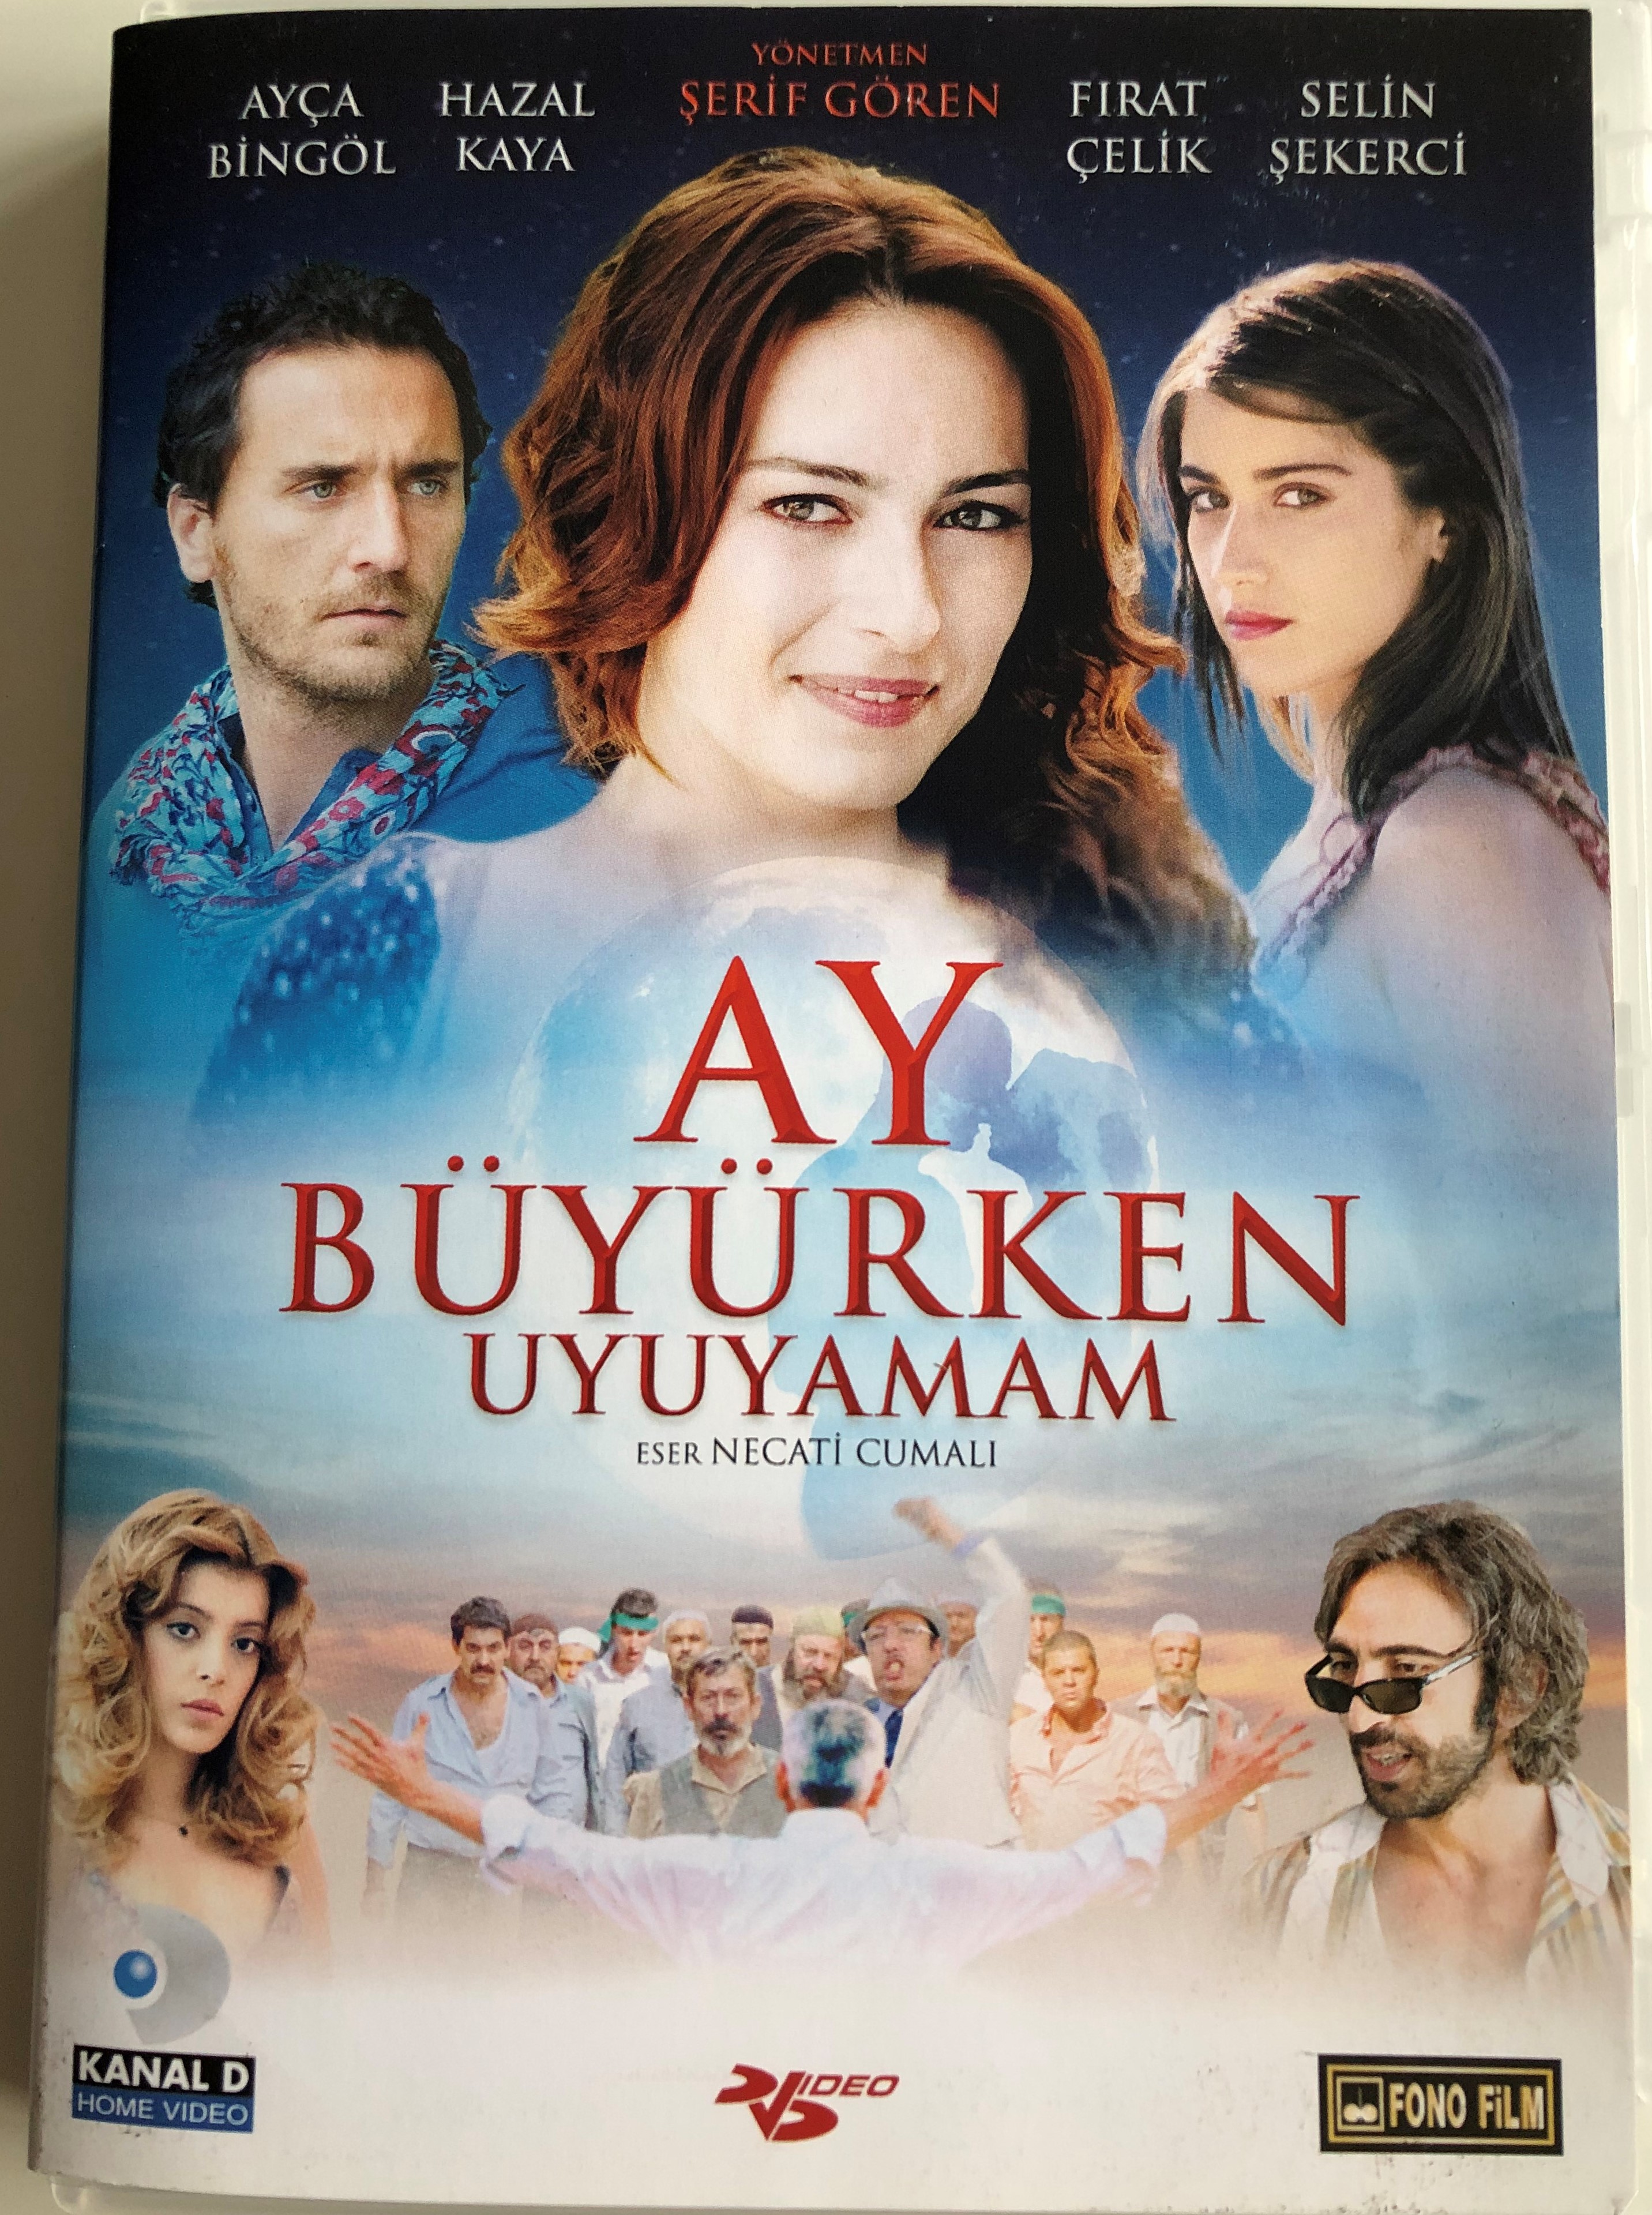 ay-b-y-rken-uyuyamam-dvd-2011-directed-by-erif-g-ren-1-.jpg